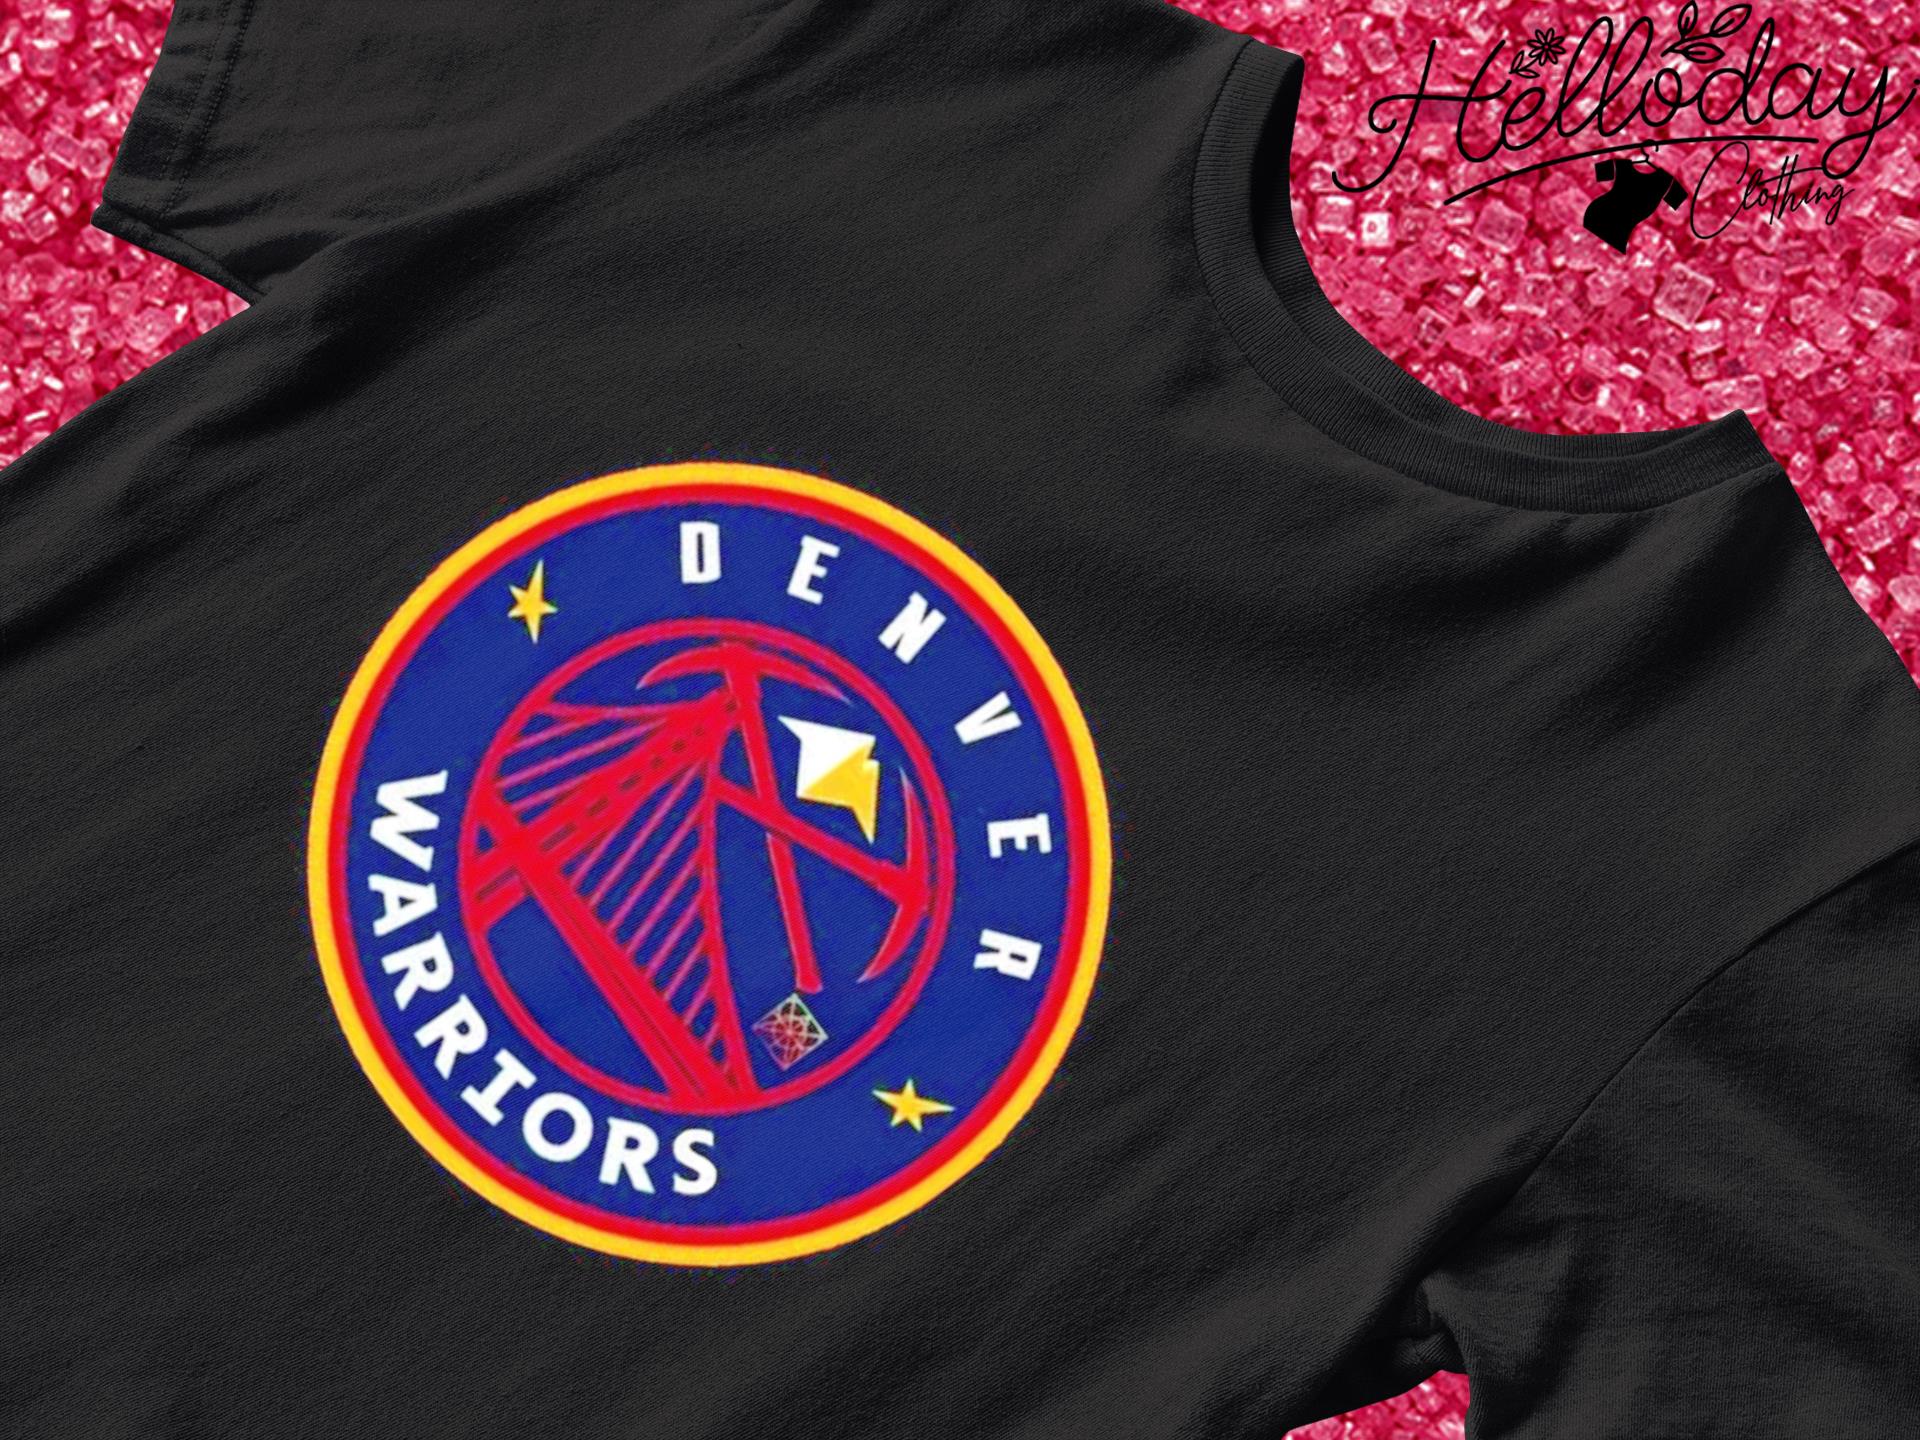 Denver Warriors logo shirt